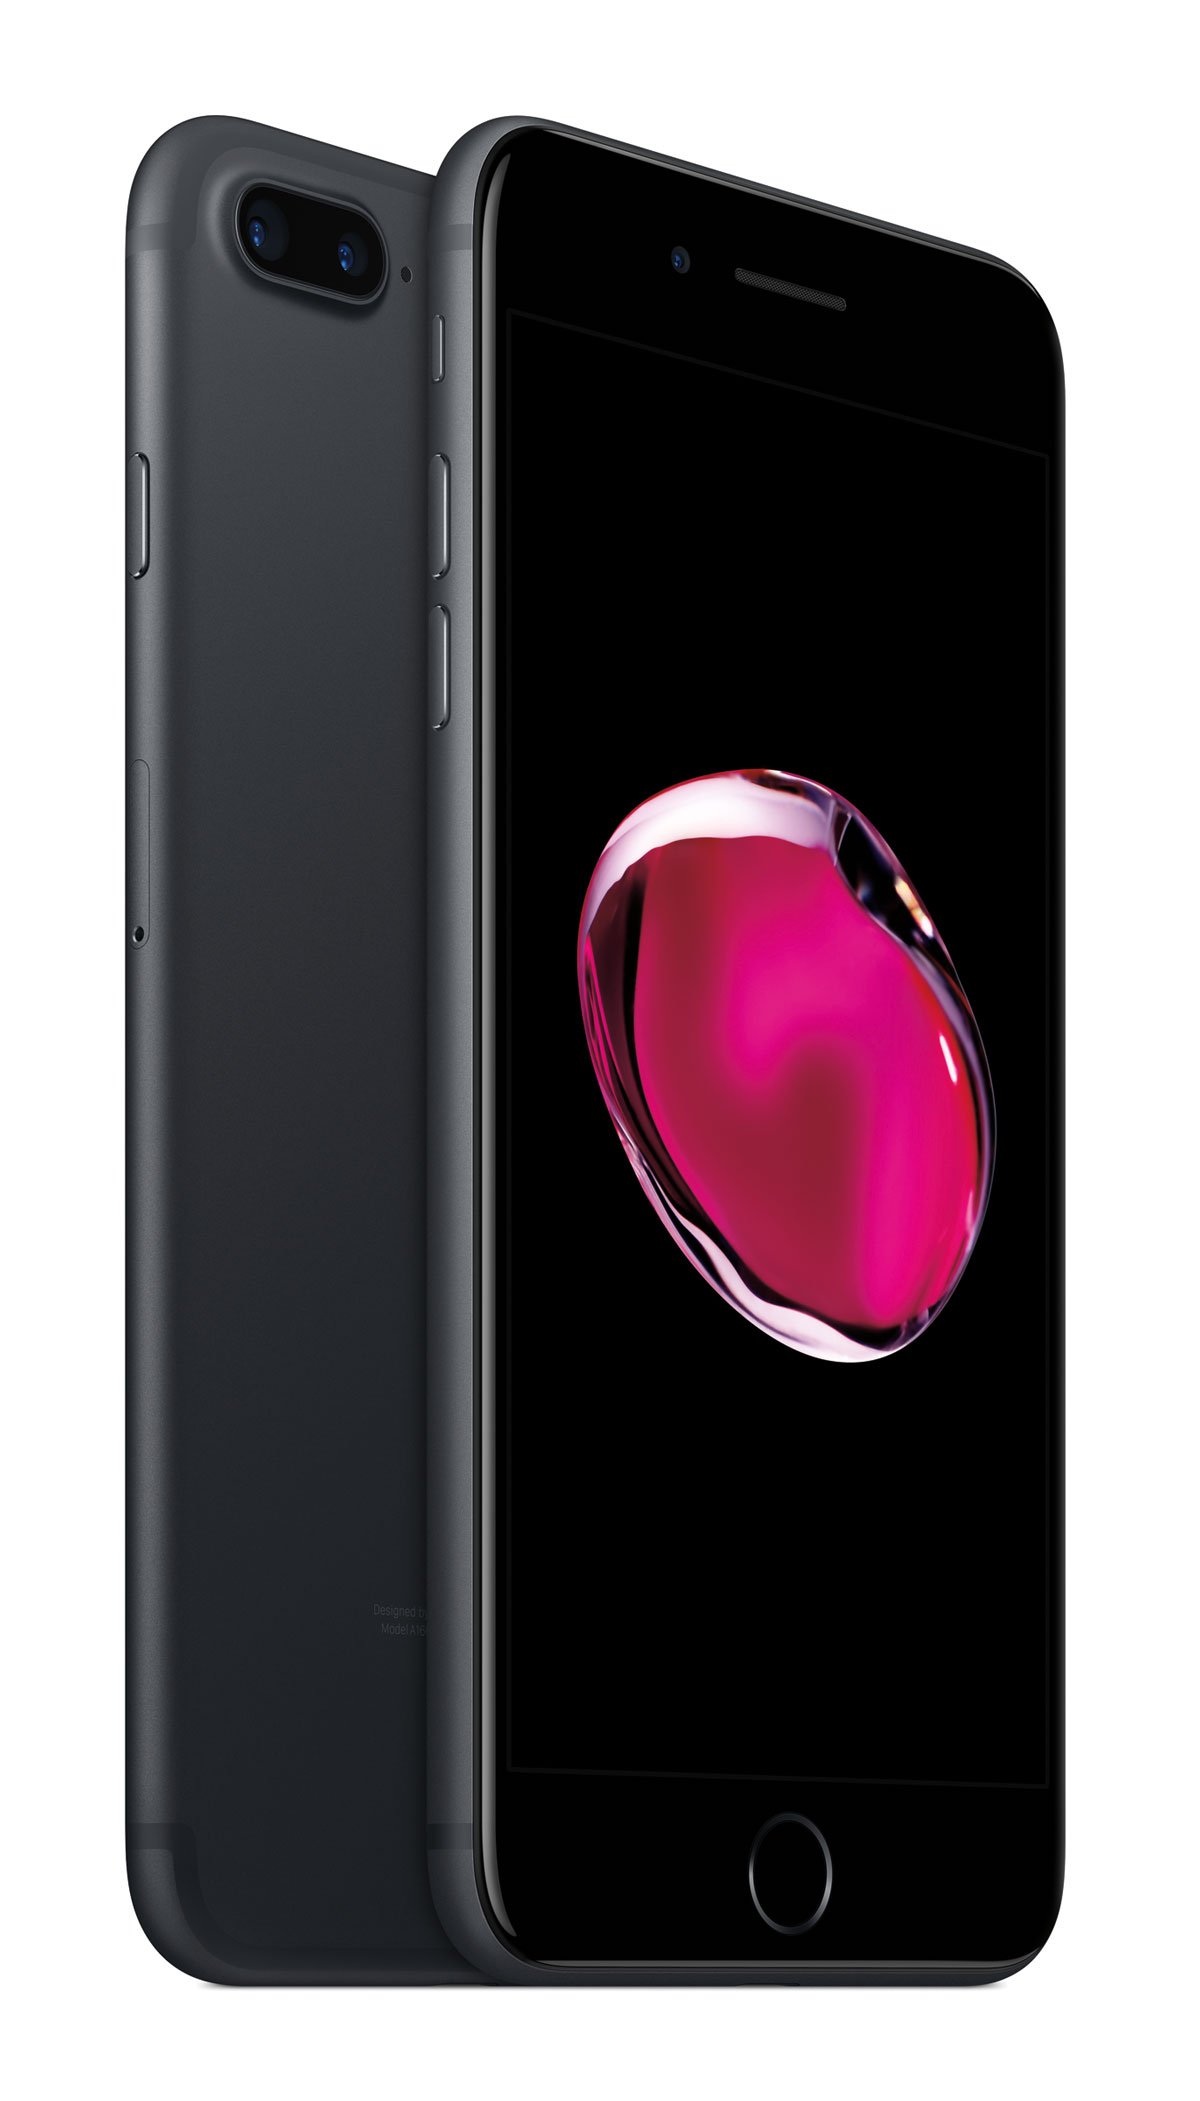 Apple iPhone 7 & 7 Plus | Airpods, No Headphone Jack, Black Color